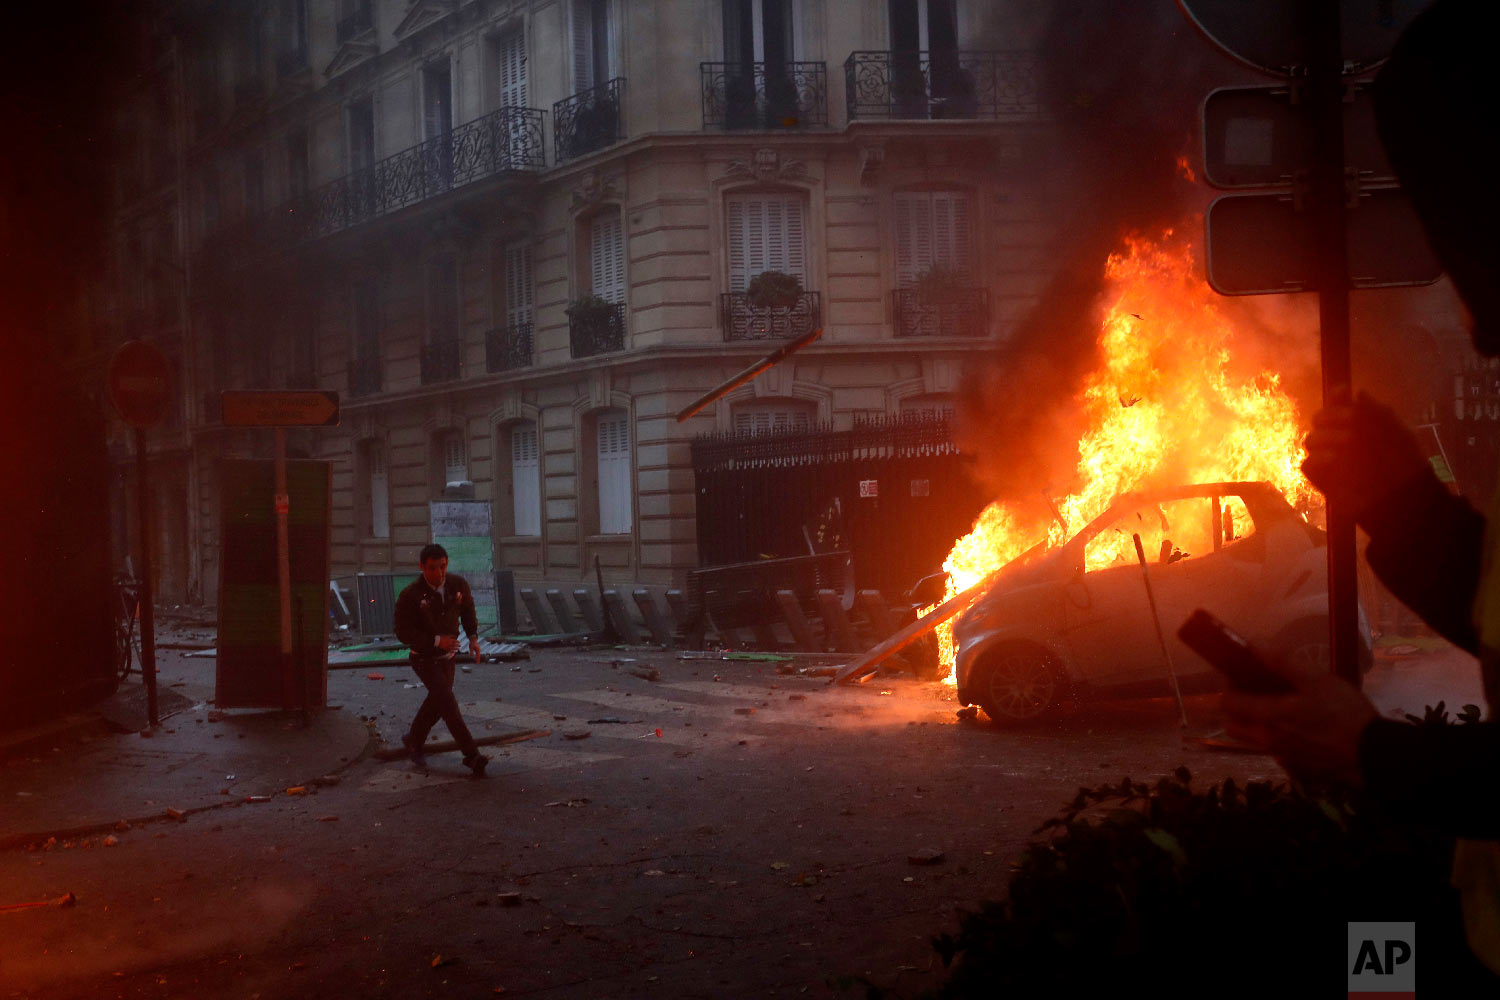  A demonstrator runs pas a burning car during a demonstration in Paris on Dec. 1, 2018. (AP Photo/Thibault Camus) 